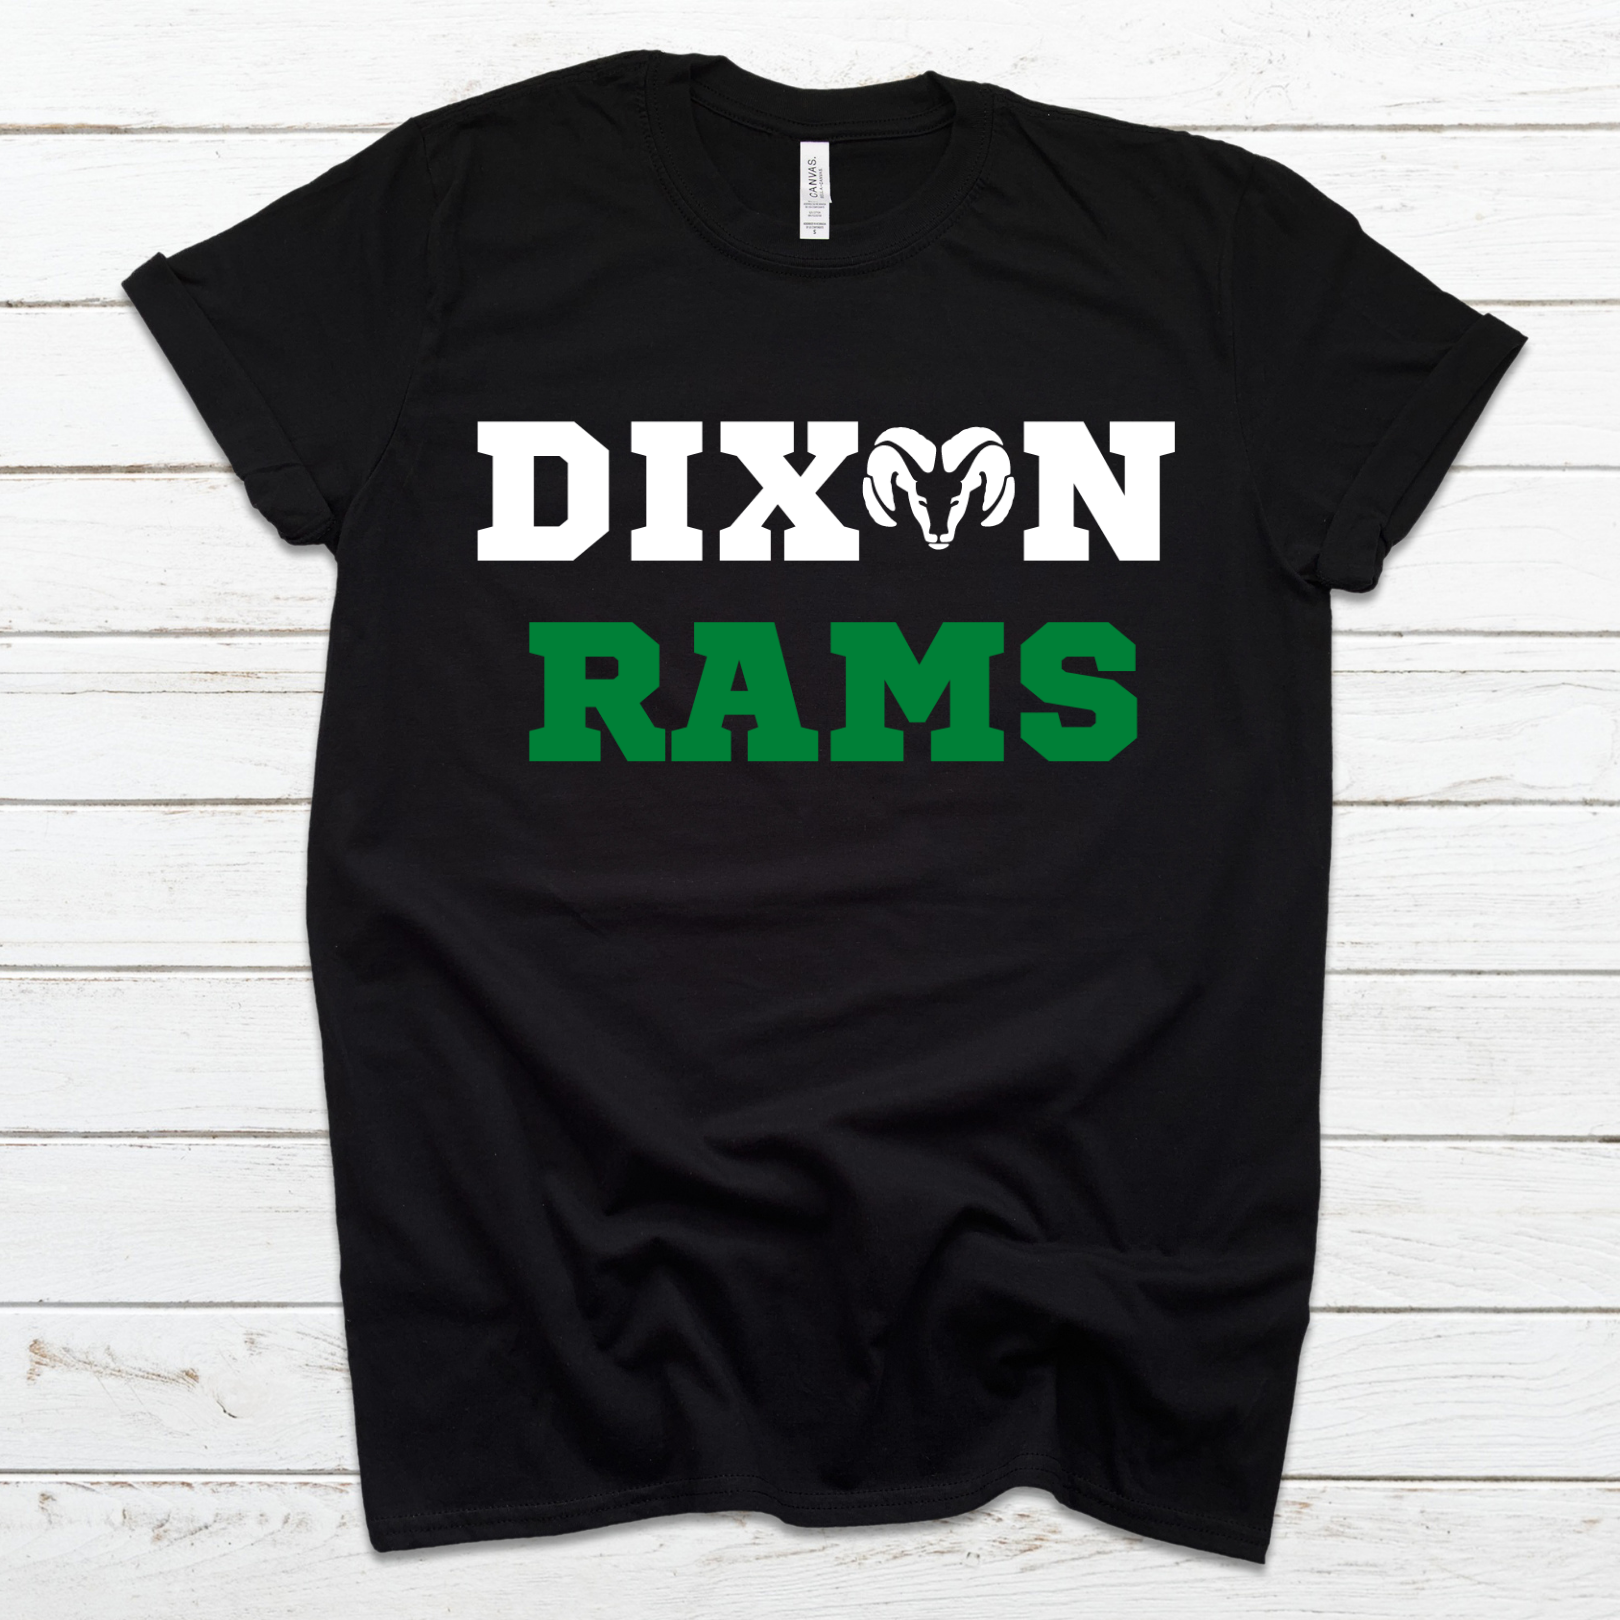 Dixon Rams (Toddler & Youth)